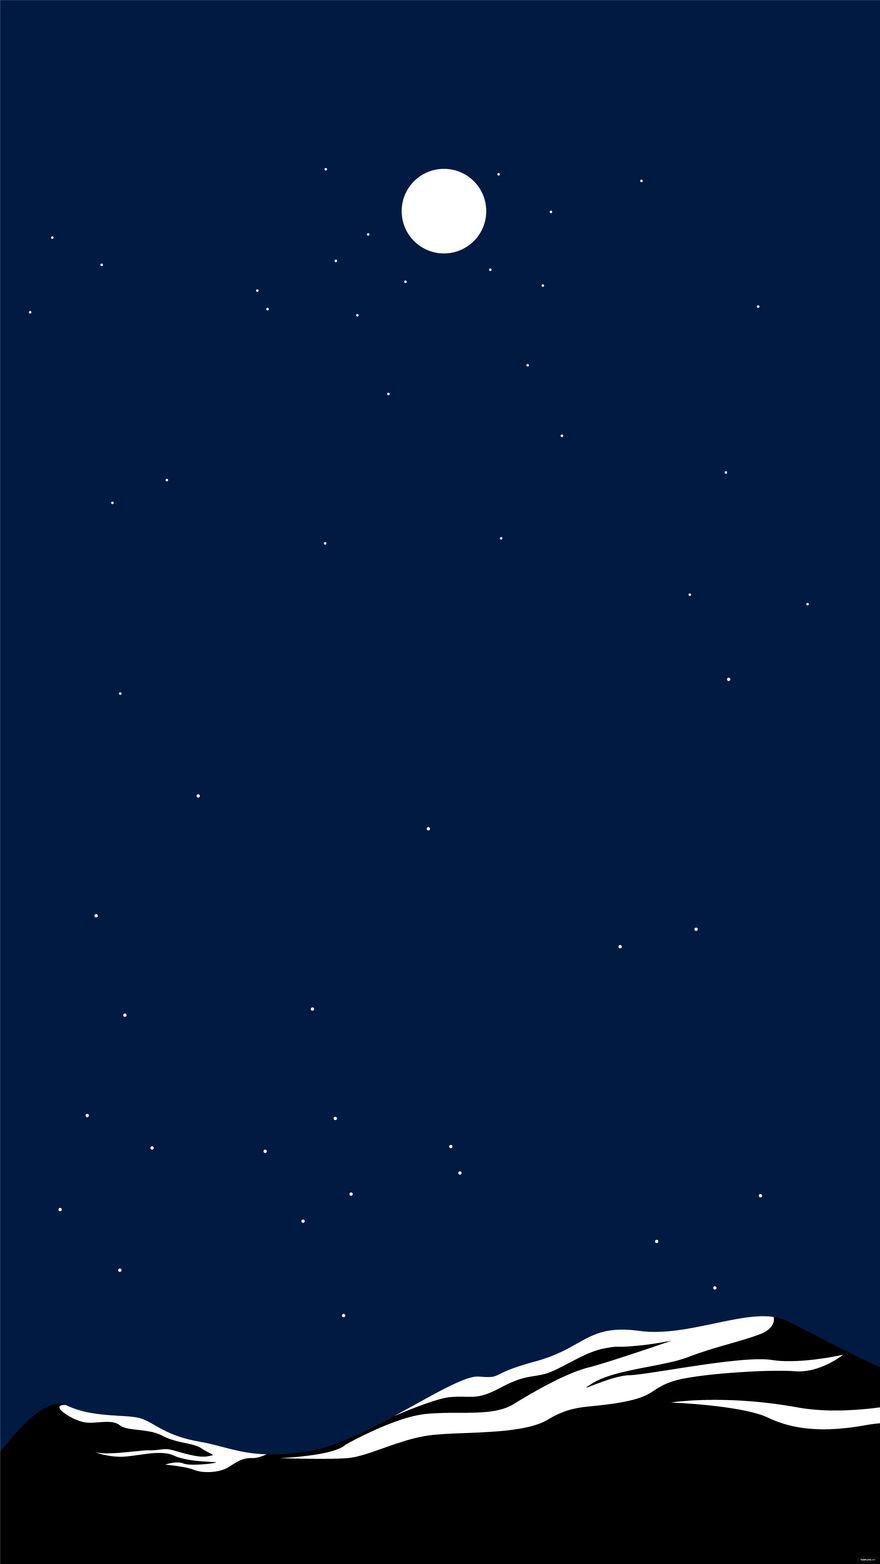 Night Sky Iphone Background in Illustrator, EPS, SVG, JPG, PNG